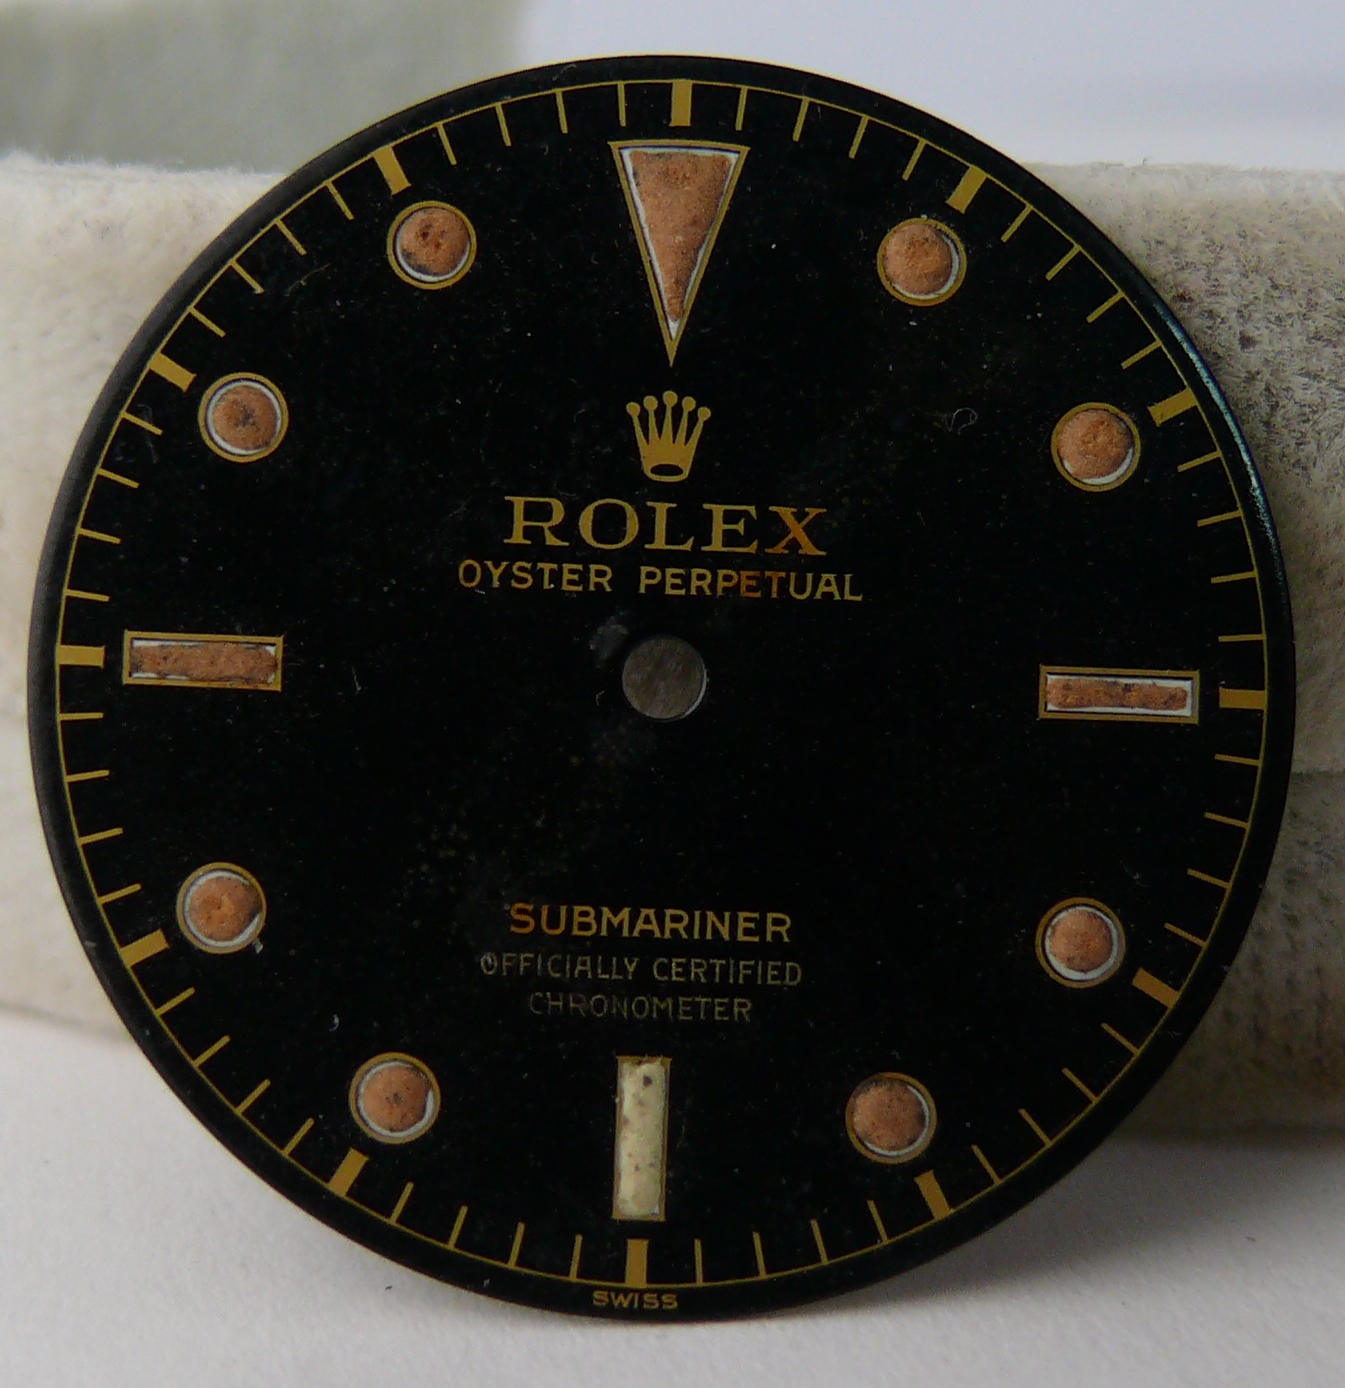 Vintage Rolex 5508 James Bond Submariner Dial circa 1950s - Image 2 of 12